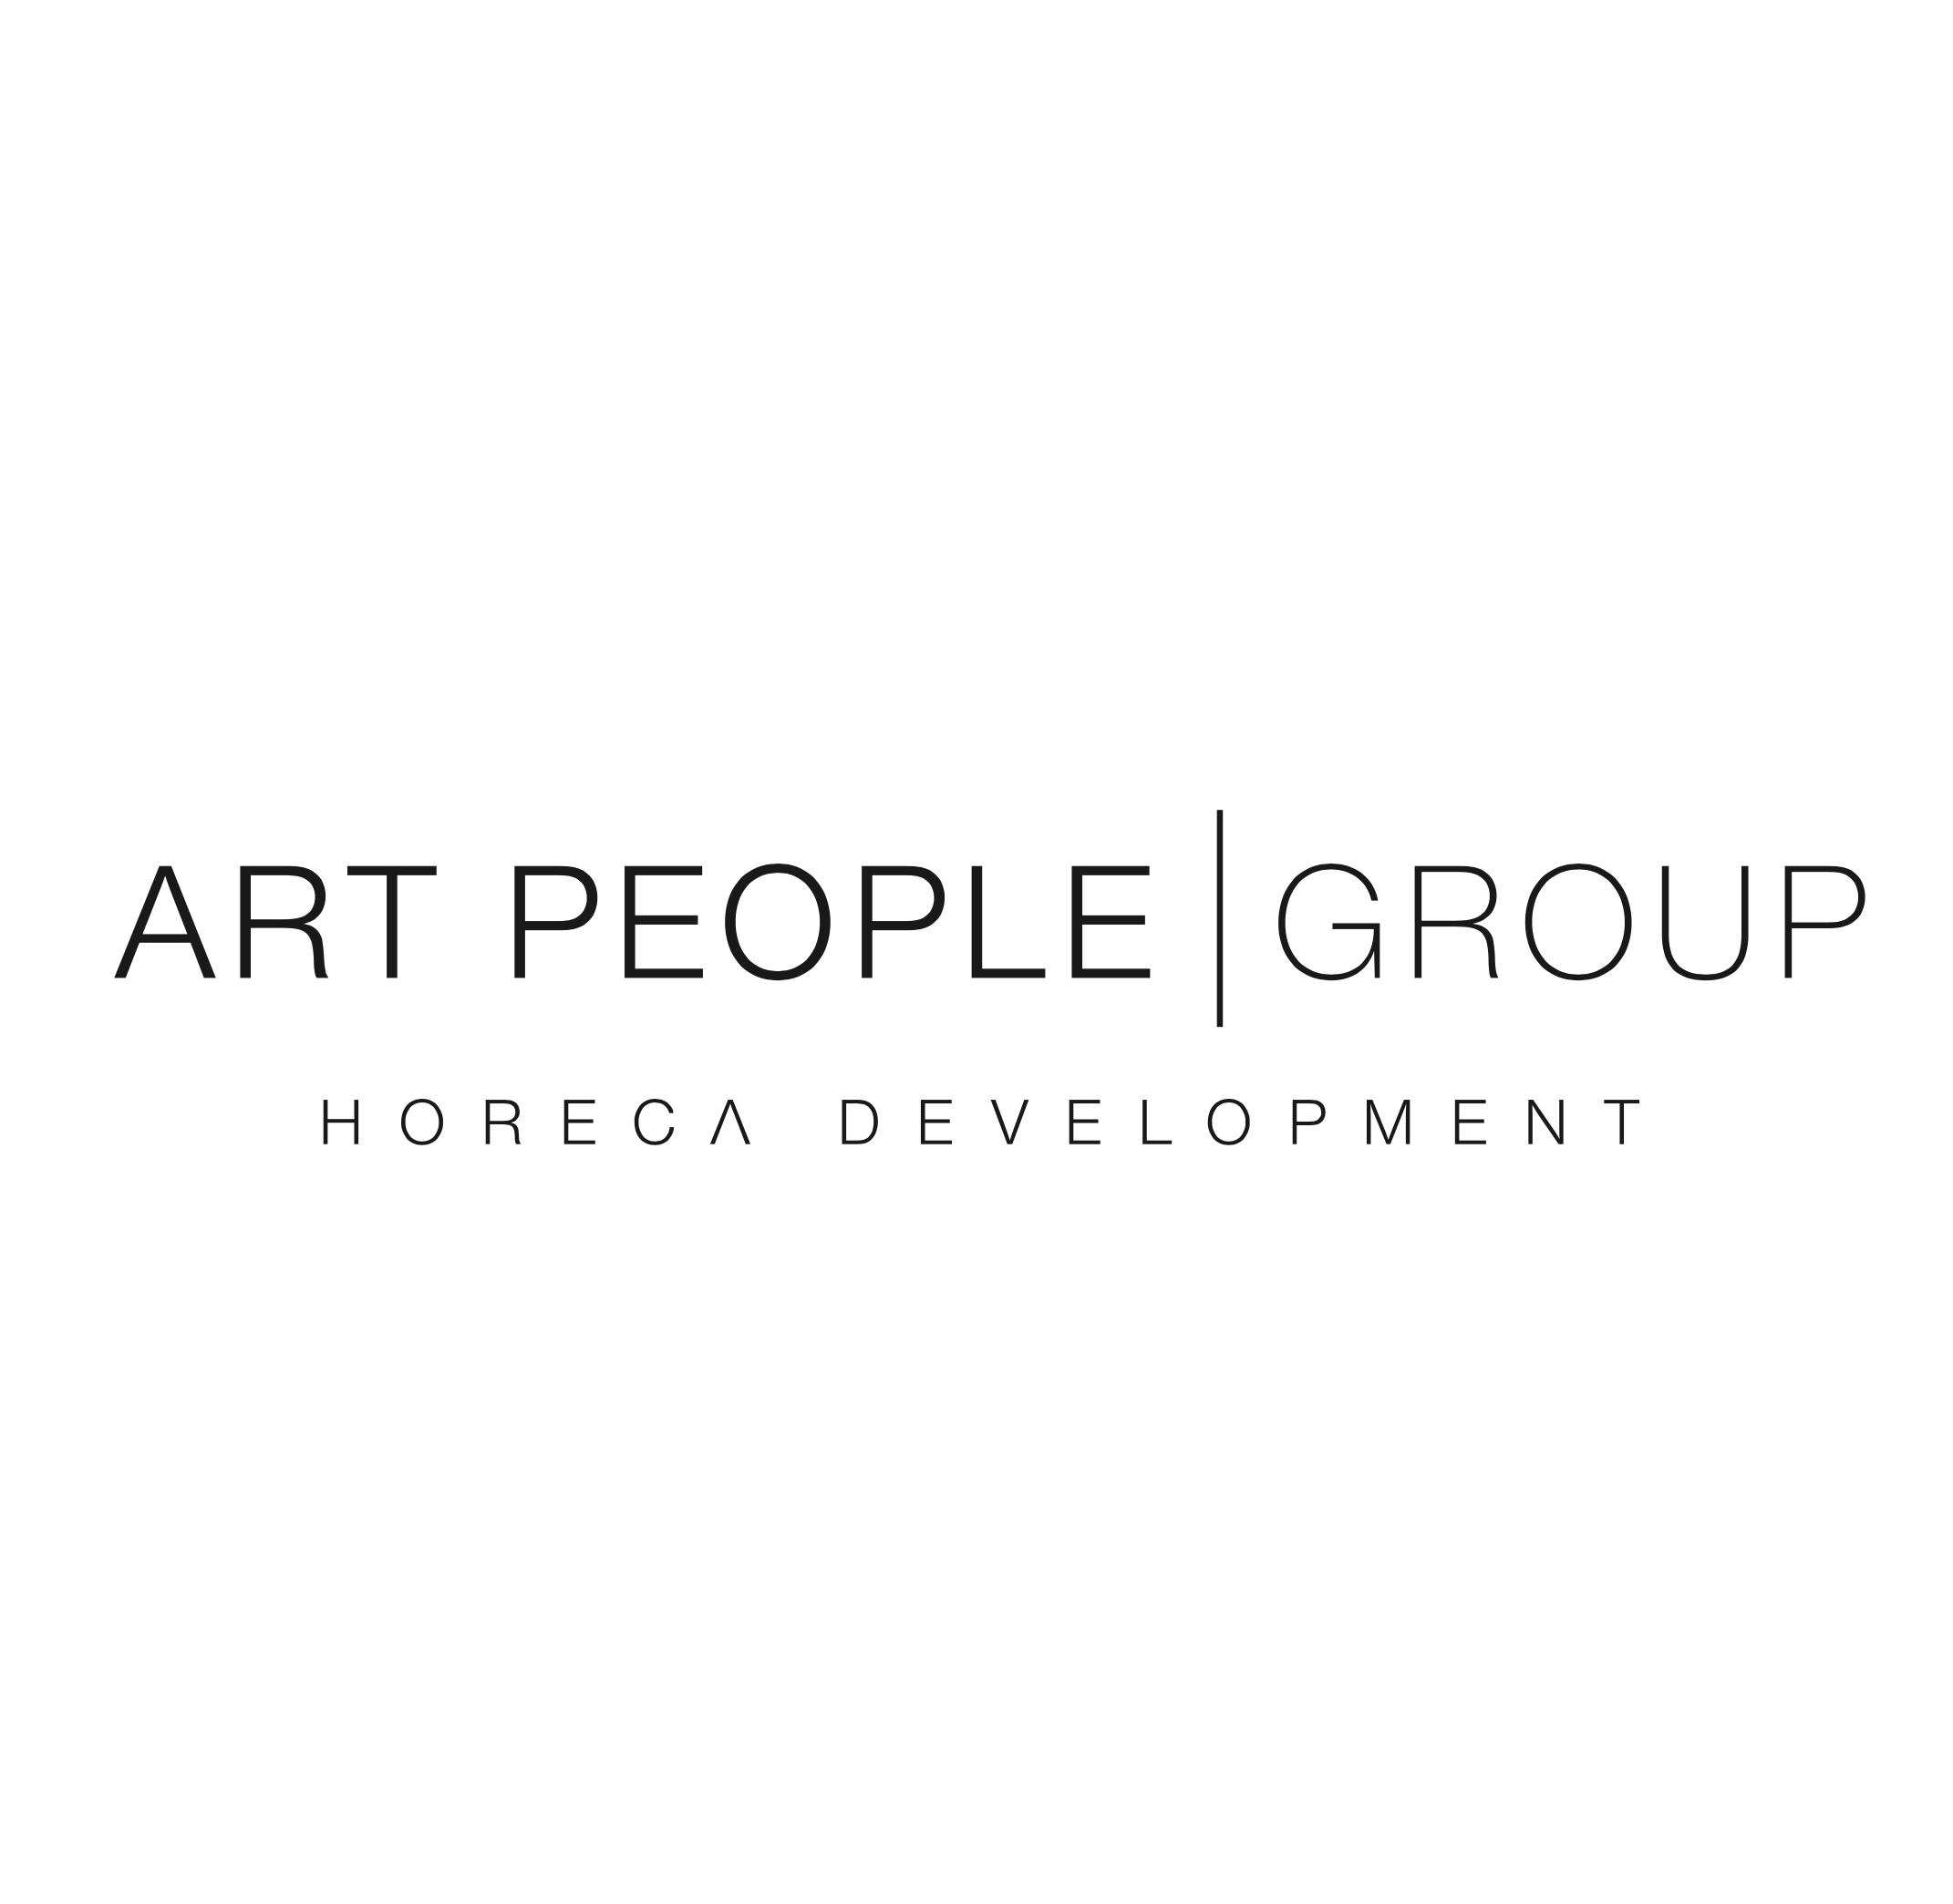 Art People Group